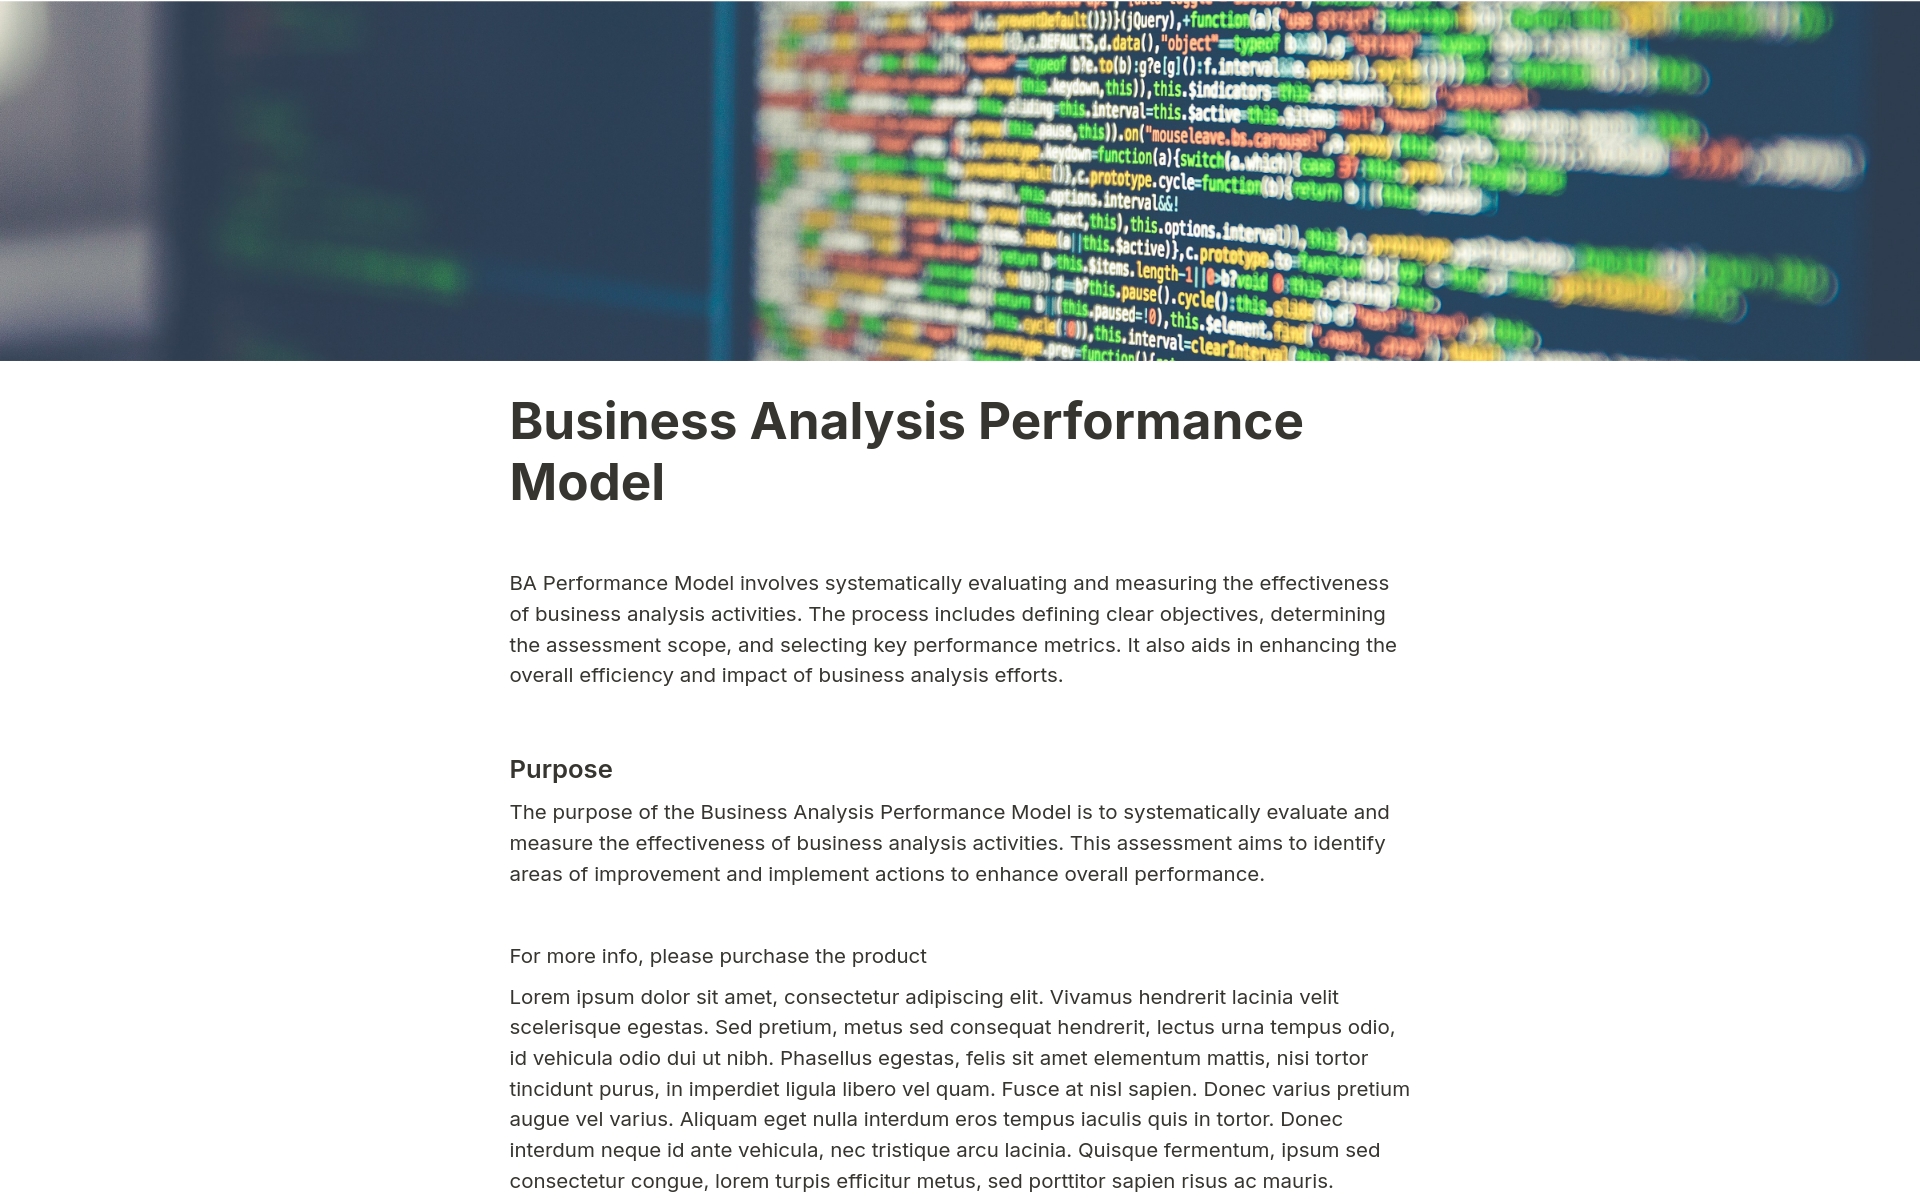 Vista previa de una plantilla para Business Analysis Performance Model